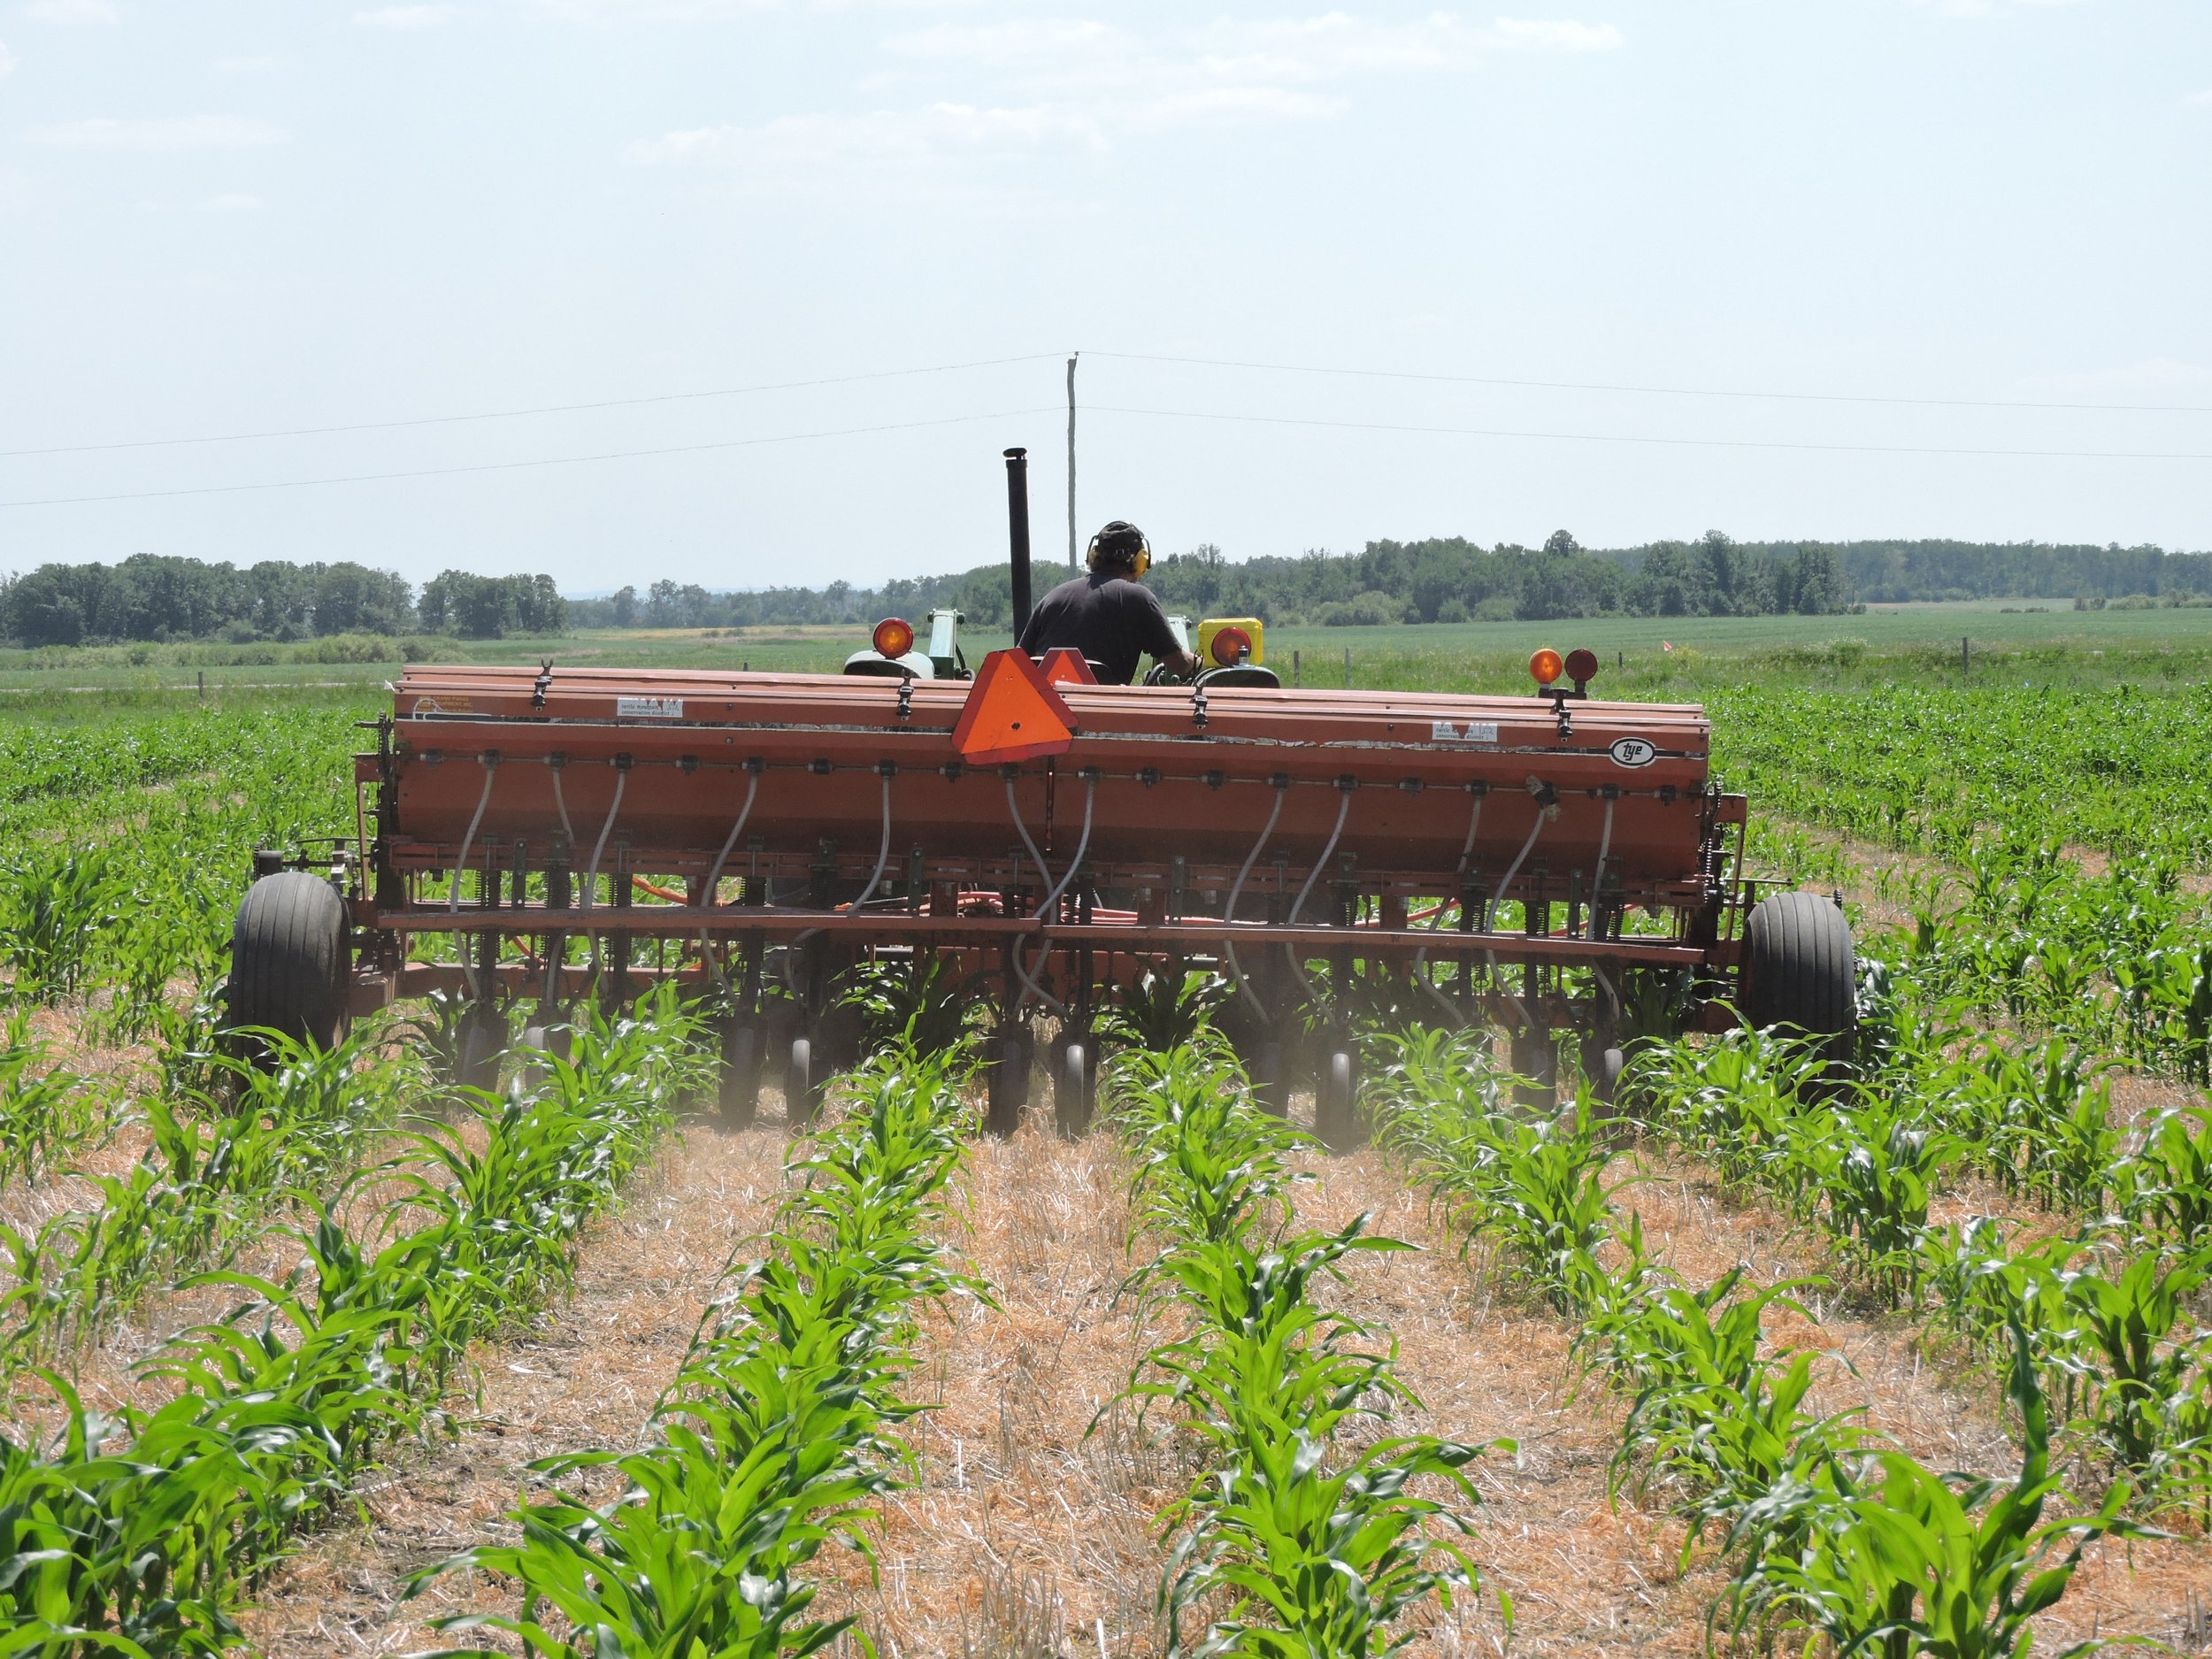 Seeding intercrop 30" corn rows